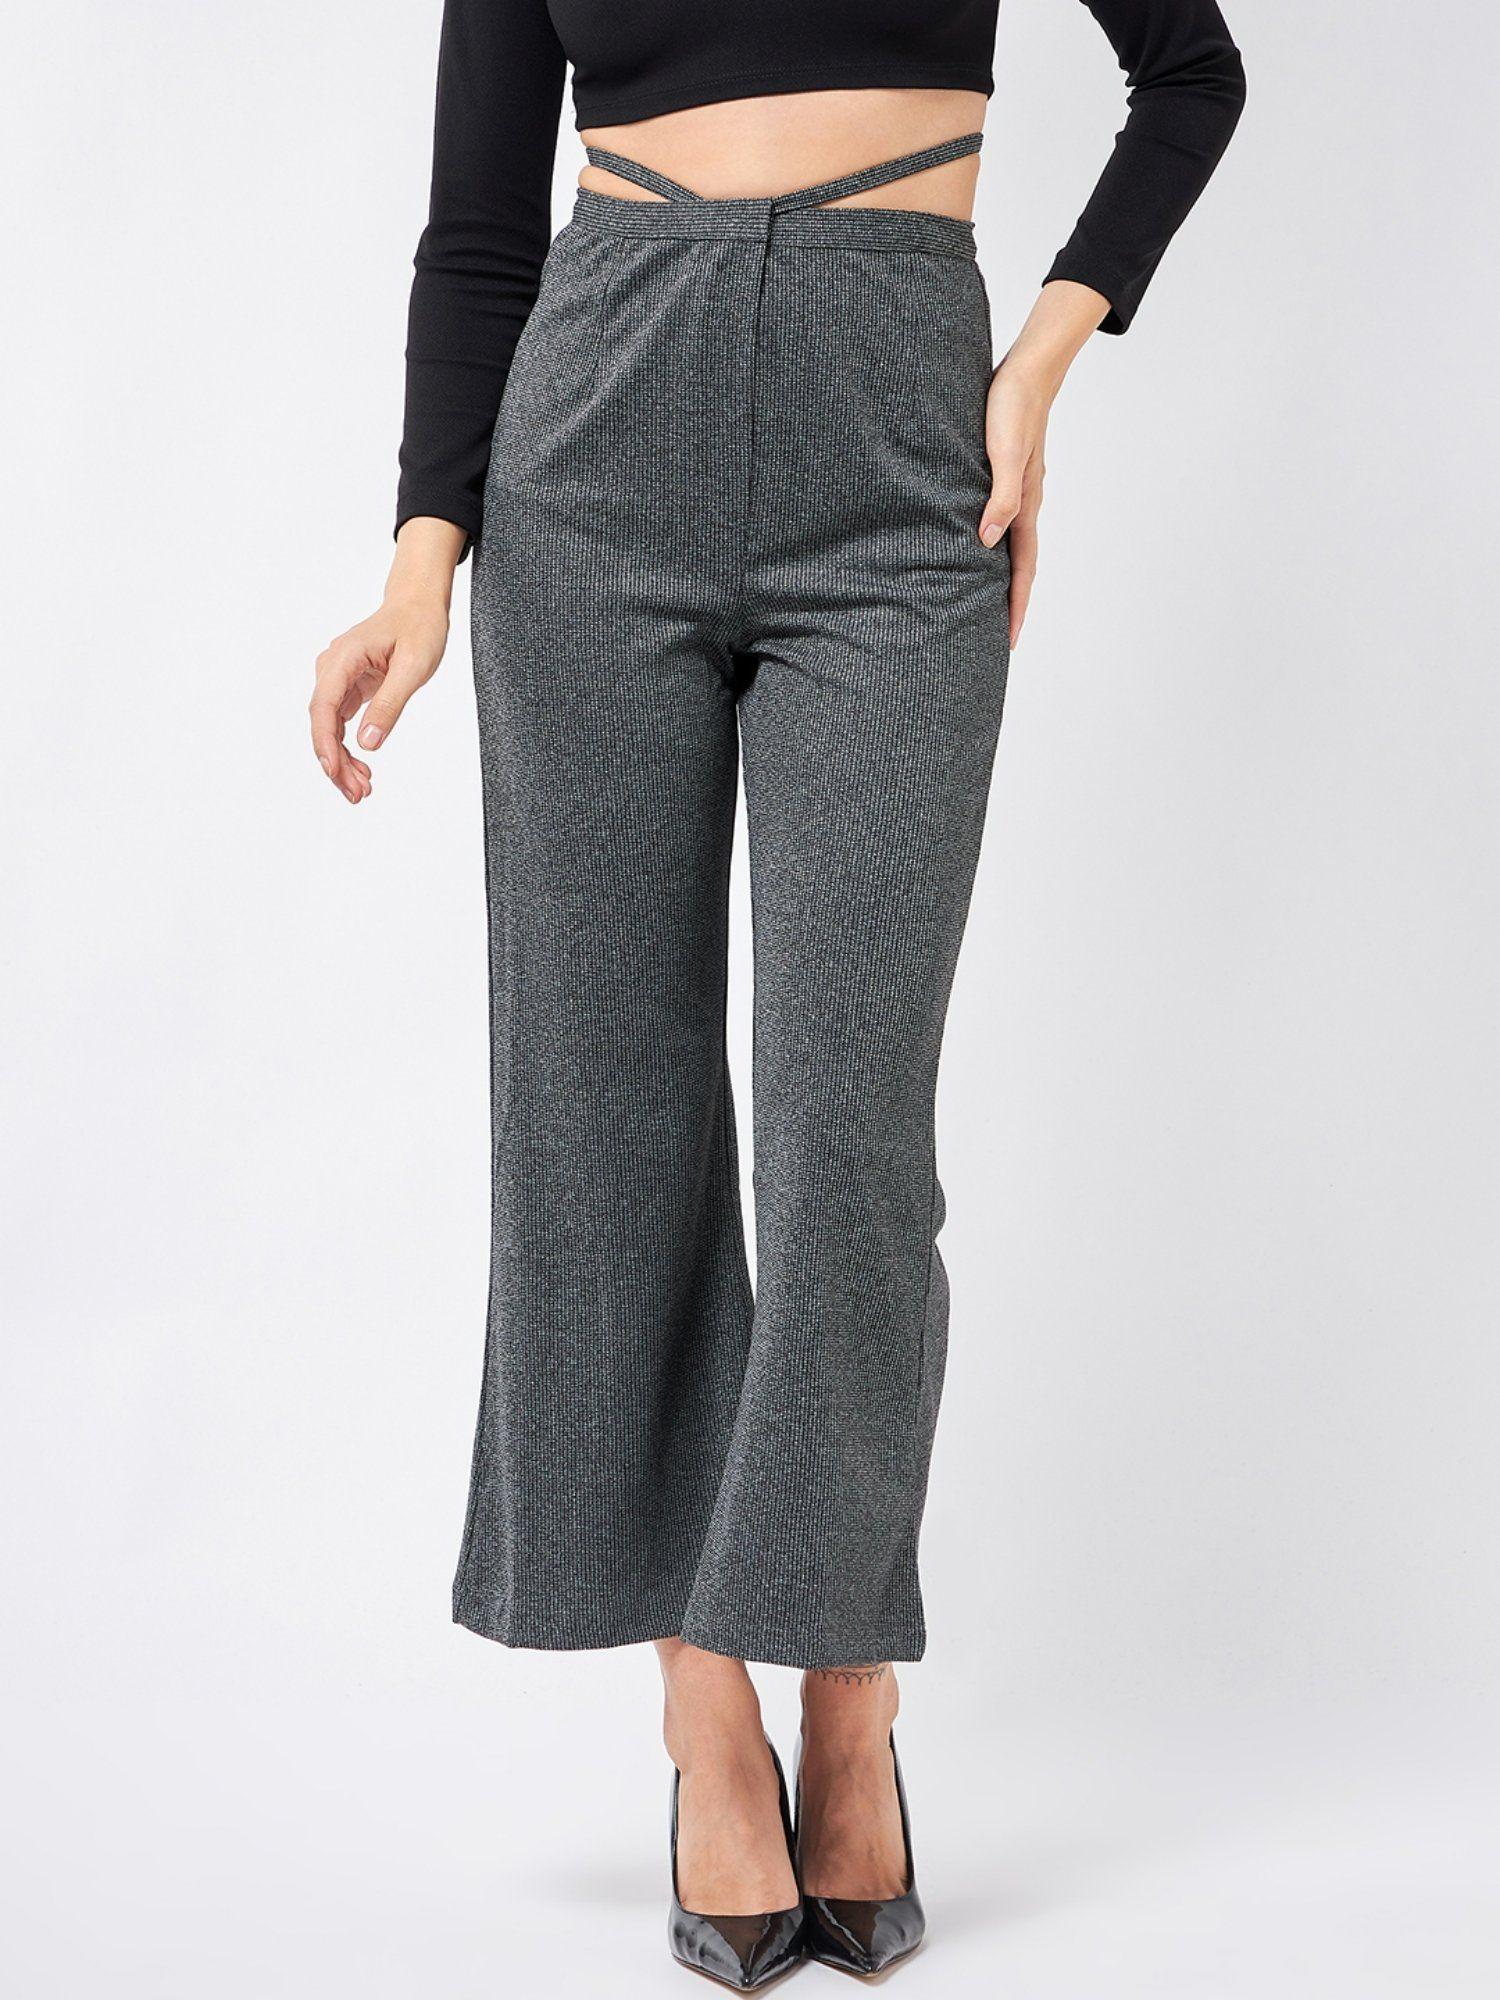 grey stretchable pants